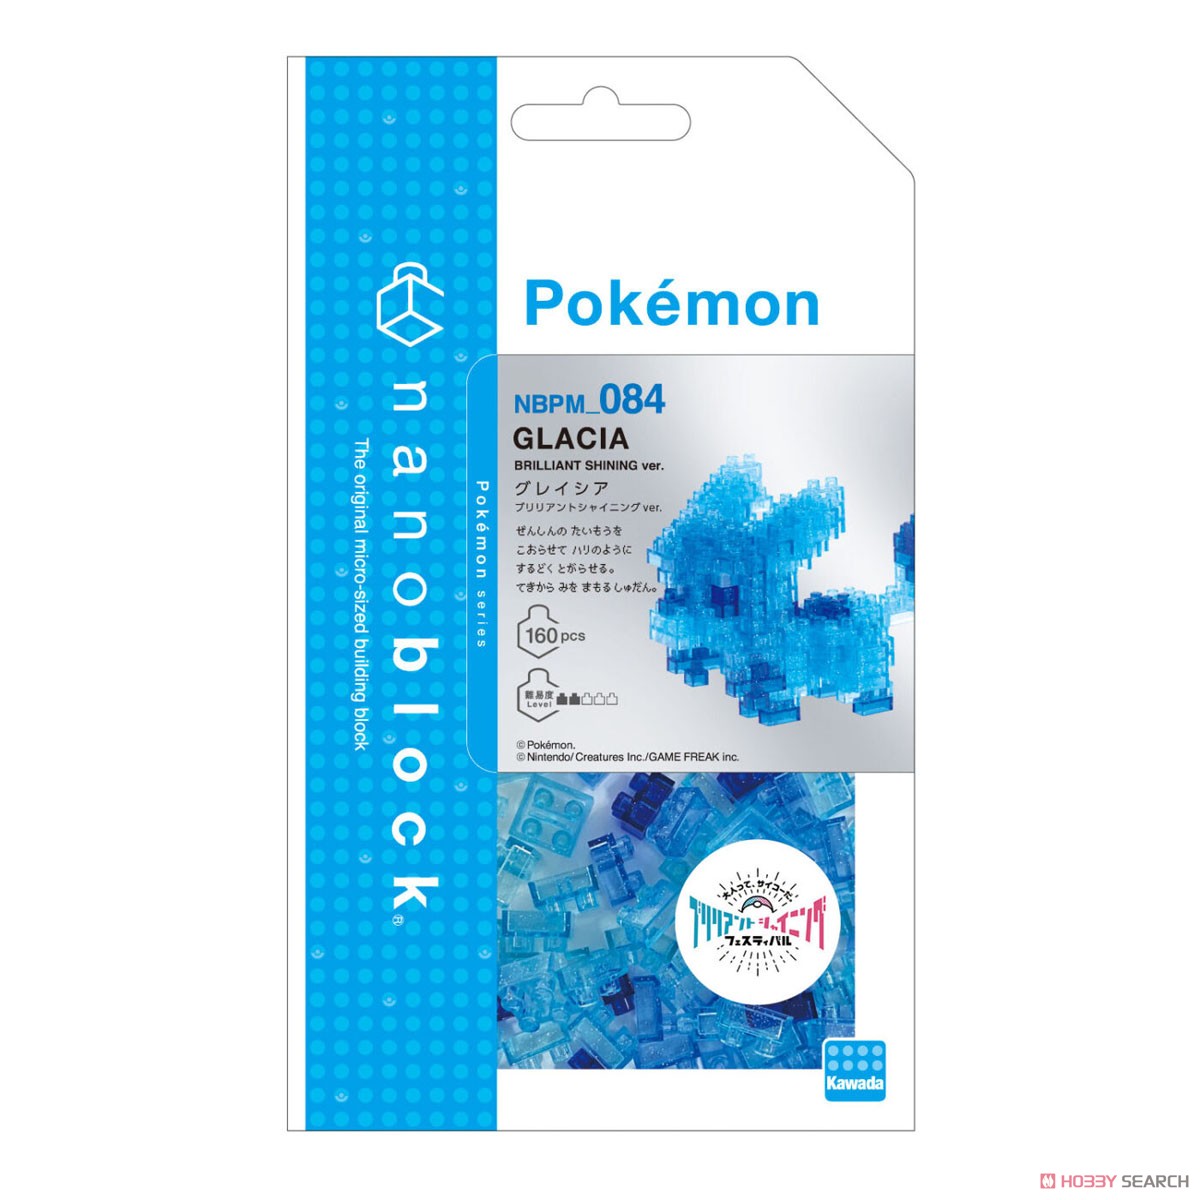 nanoblock Pokemon Glacia Brilliant Shining ver. (Block Toy) Package1